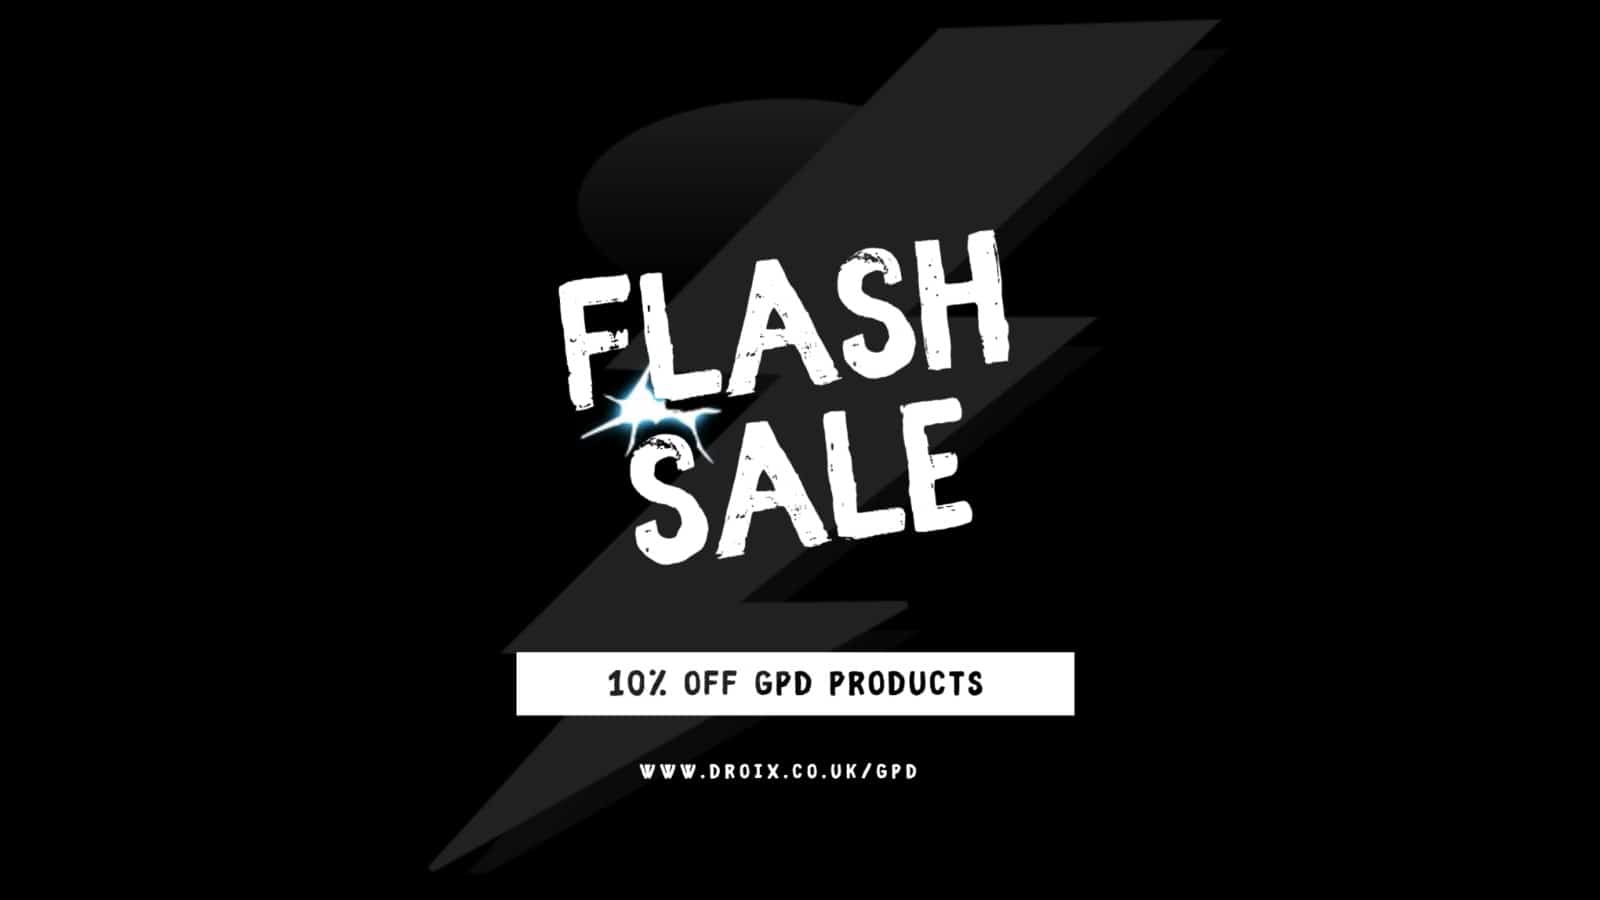 DroiX GPD Flash Sale November 2021